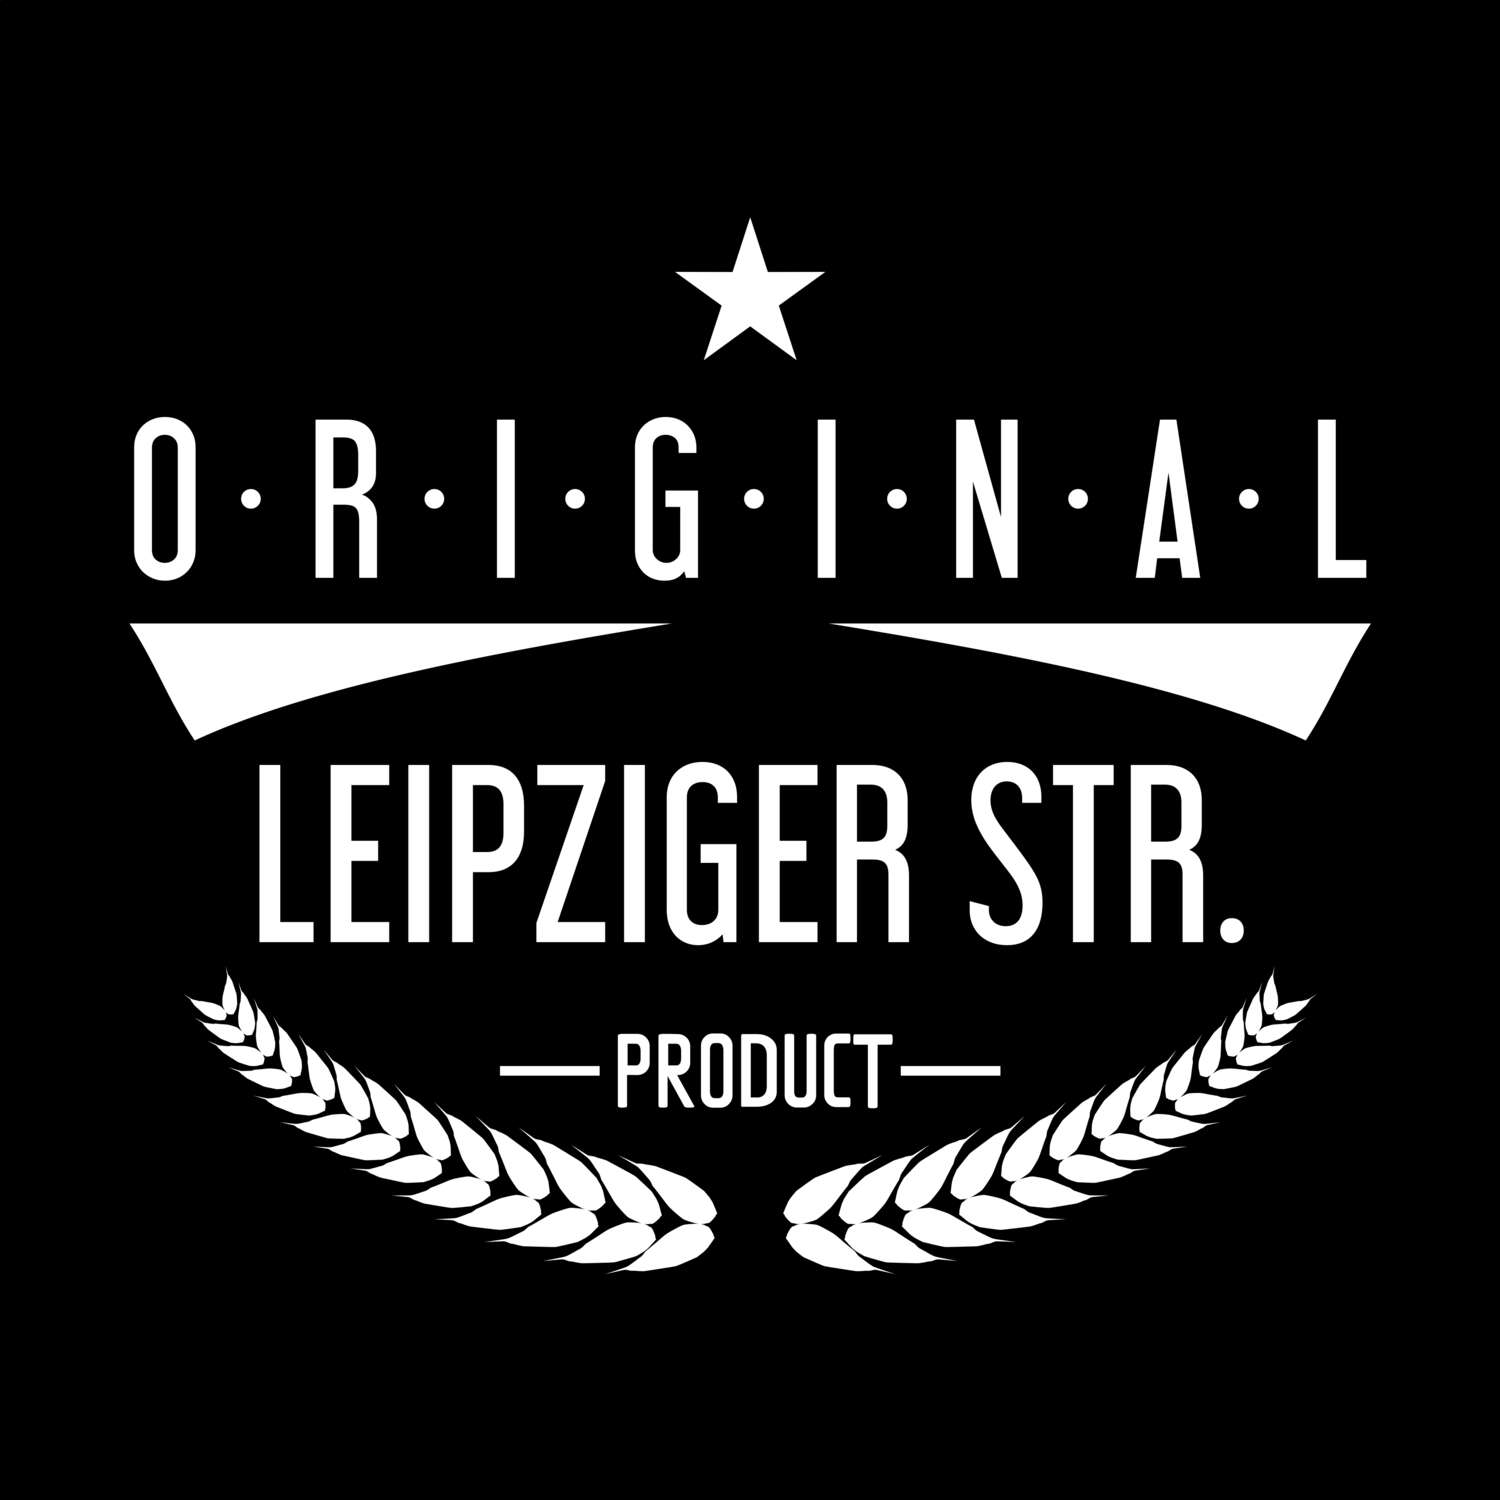 Leipziger Str. T-Shirt »Original Product«